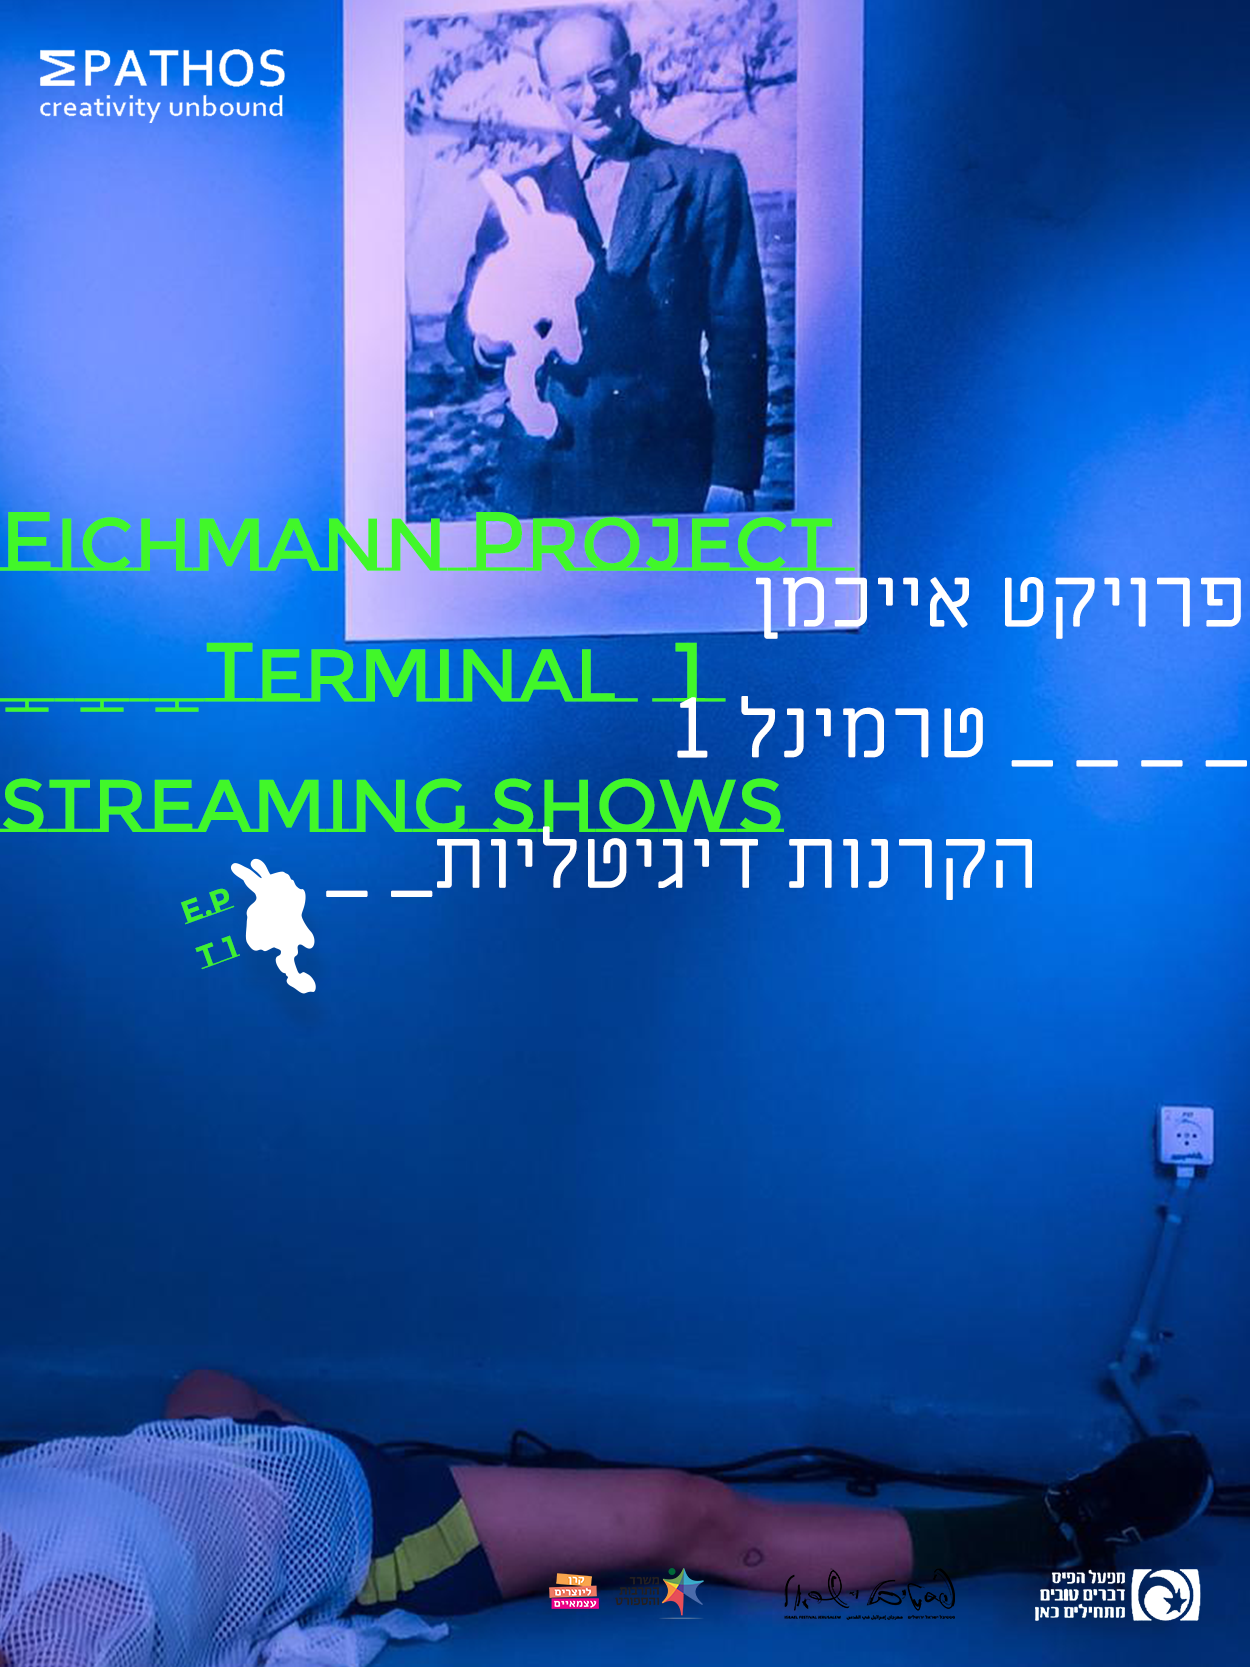 The Eichmann Project – Terminal 1 by Lilach Dekel-Avneri, Pathos-Mathos company